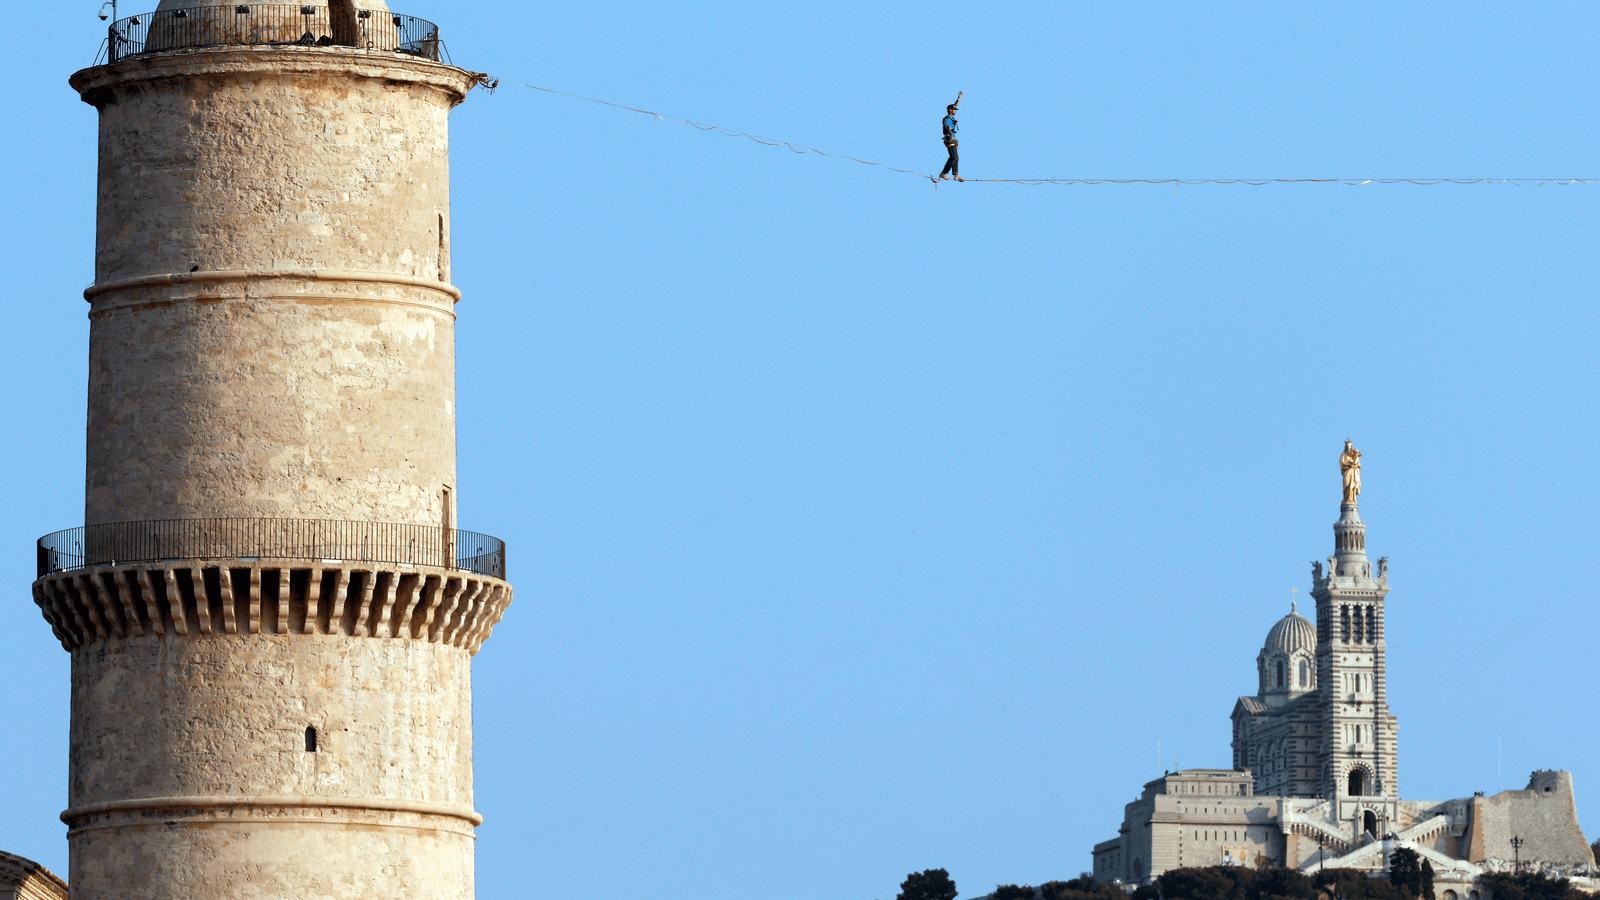 a tightrope walker in France